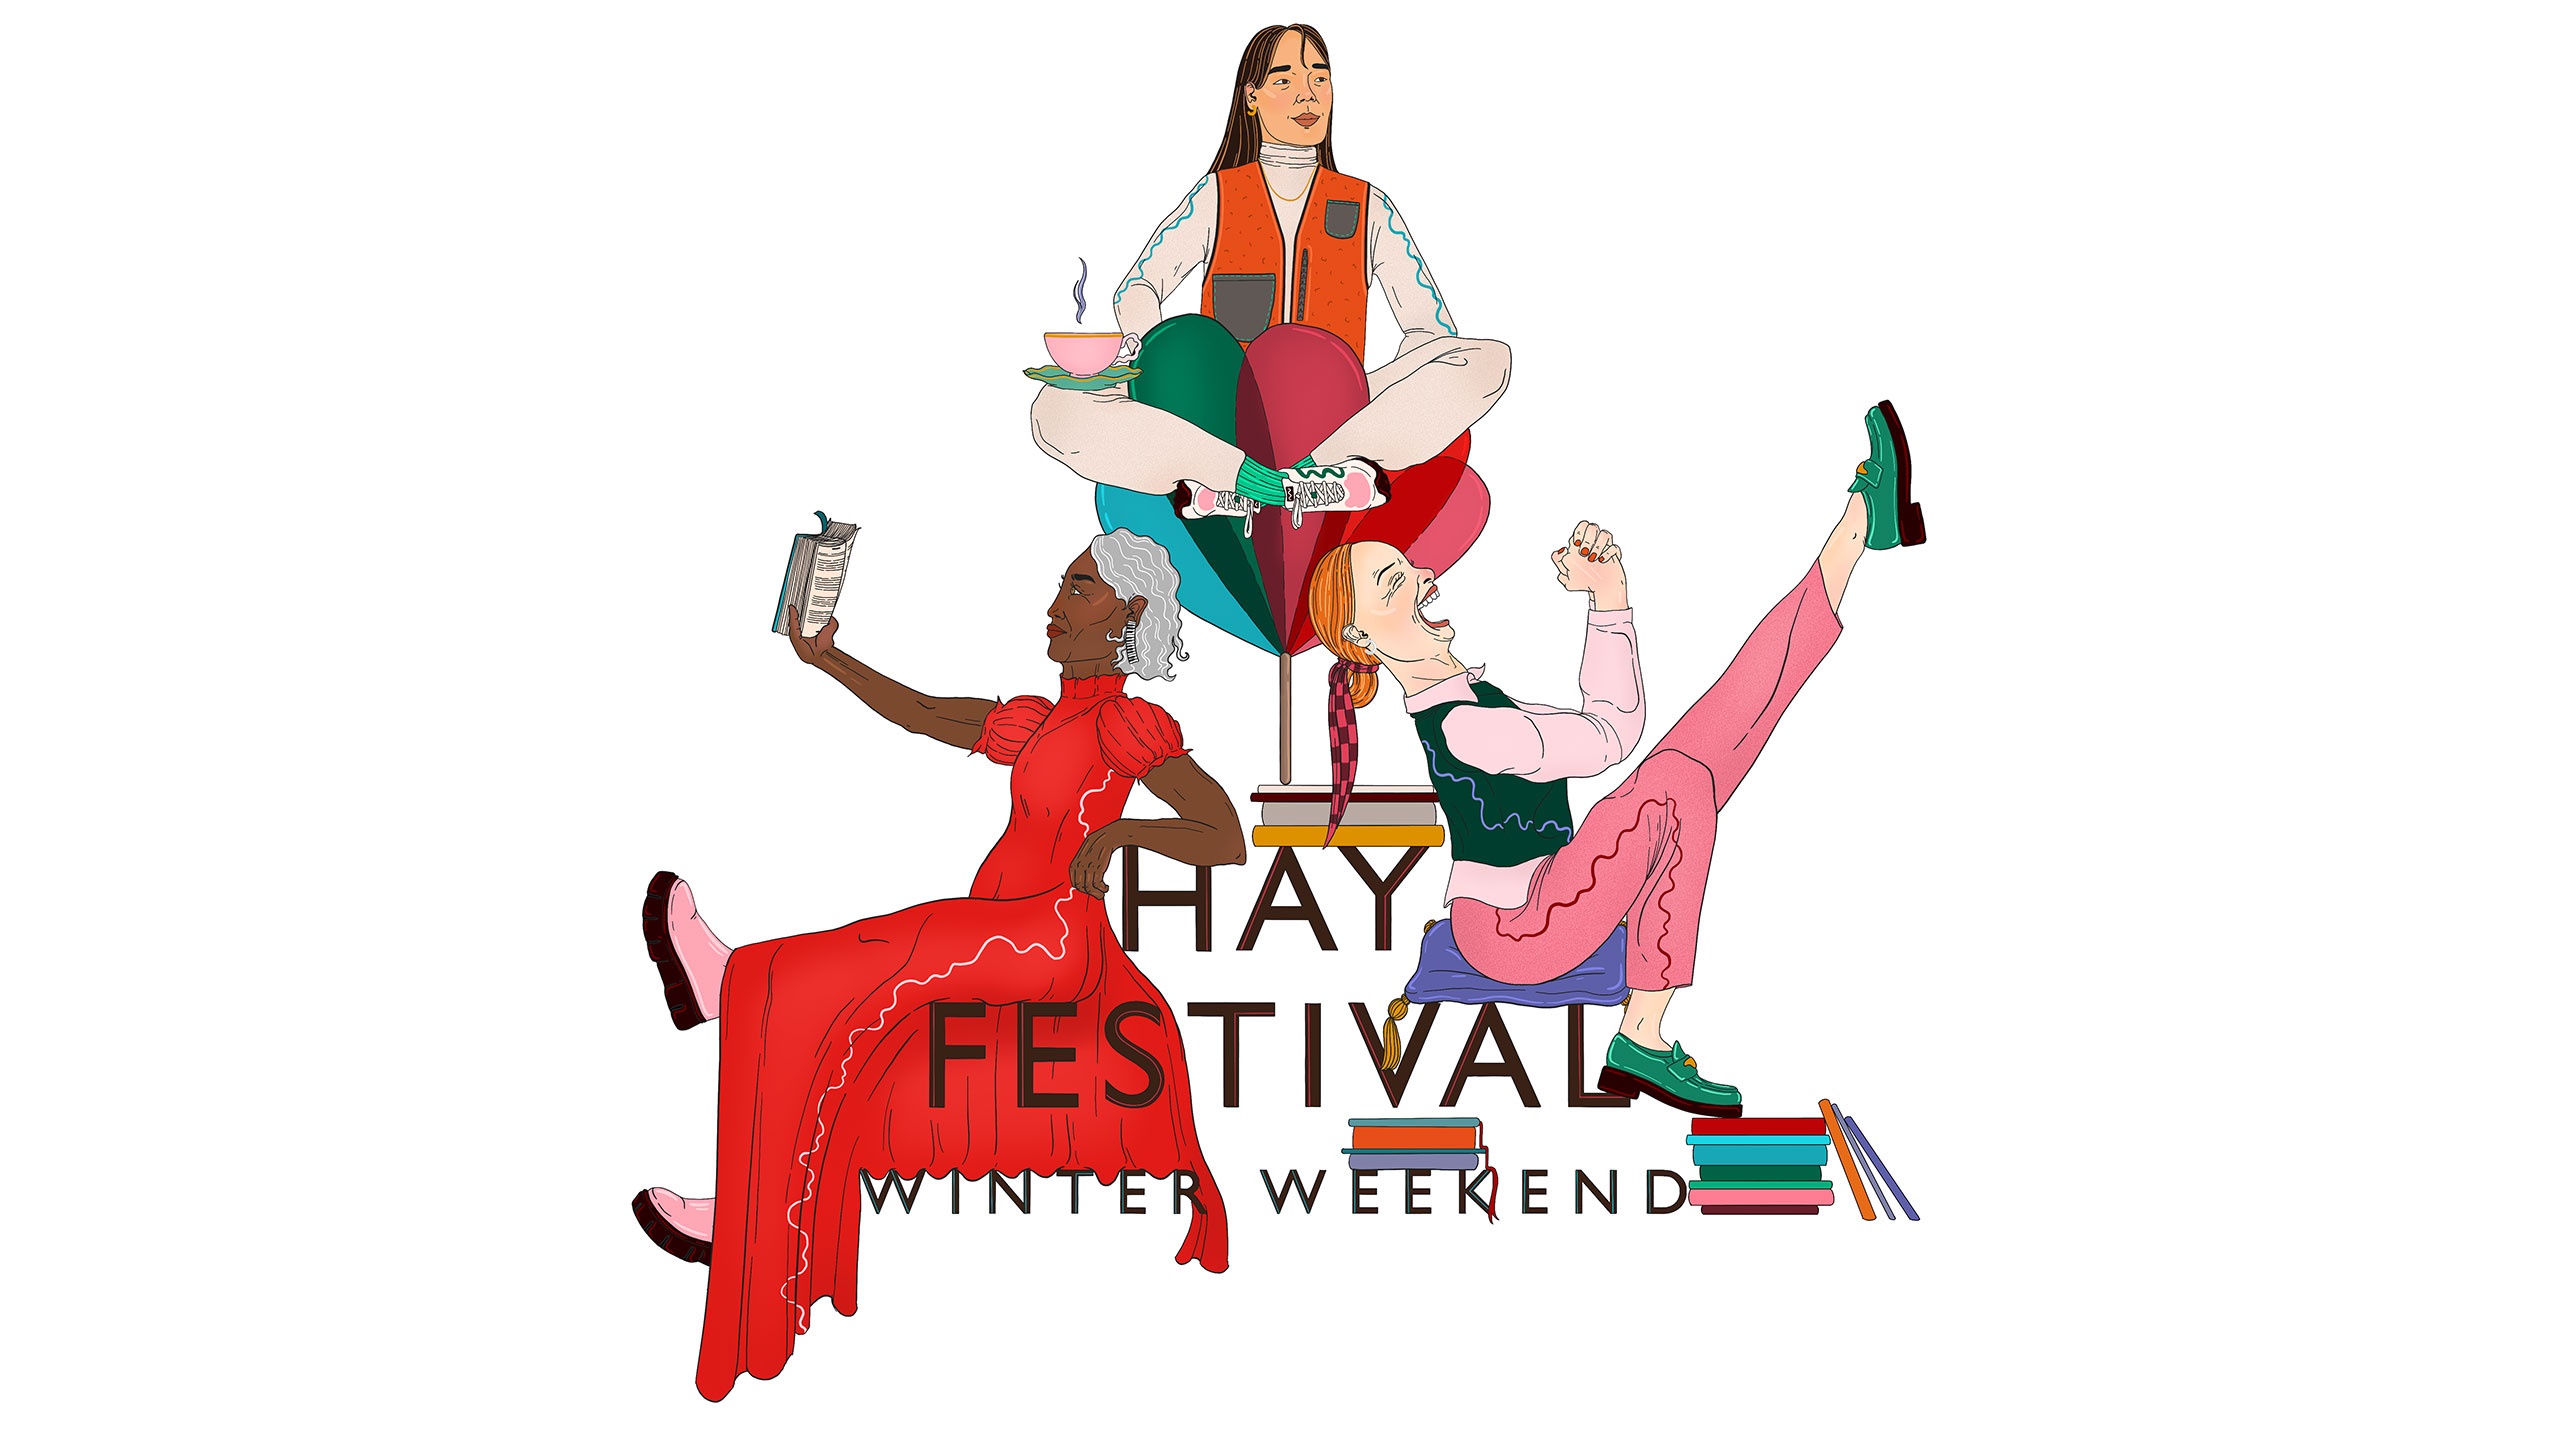 Hay Festival Winter Weekend logo reimagined by Beth Blandford